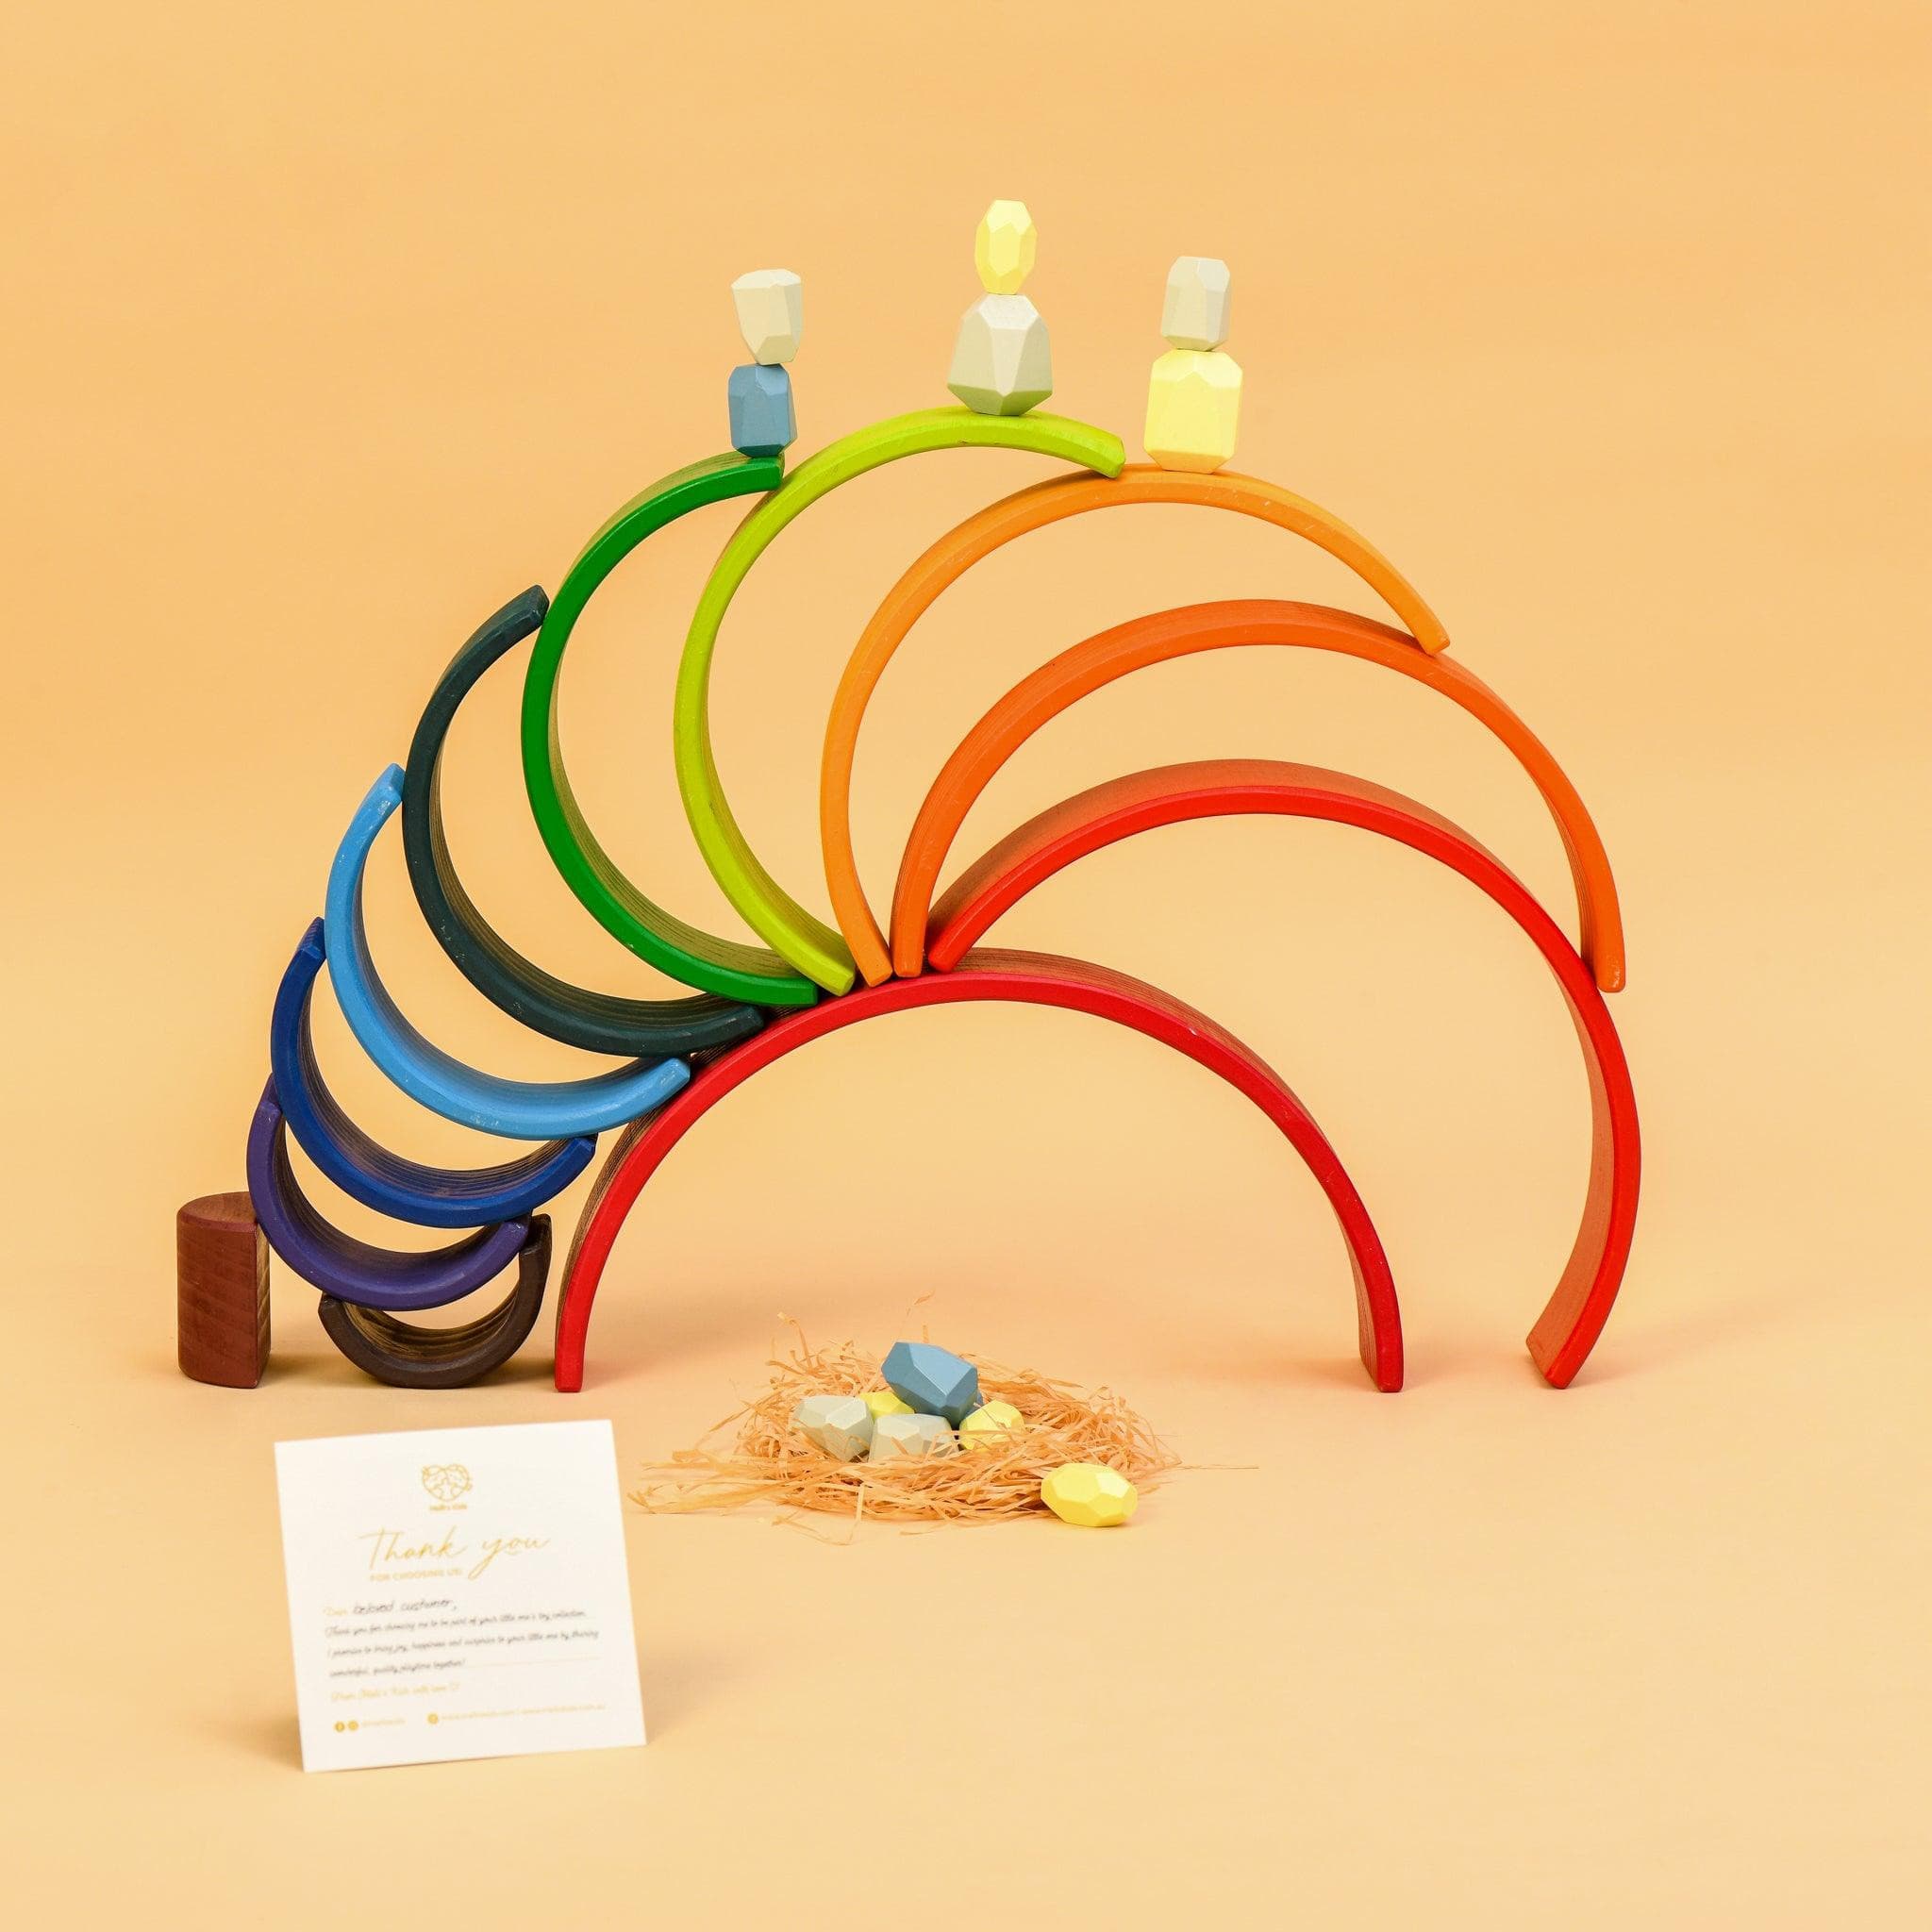 Melli's Kids Montessori Wooden Rainbow Stacker (12PCS - LARGE)